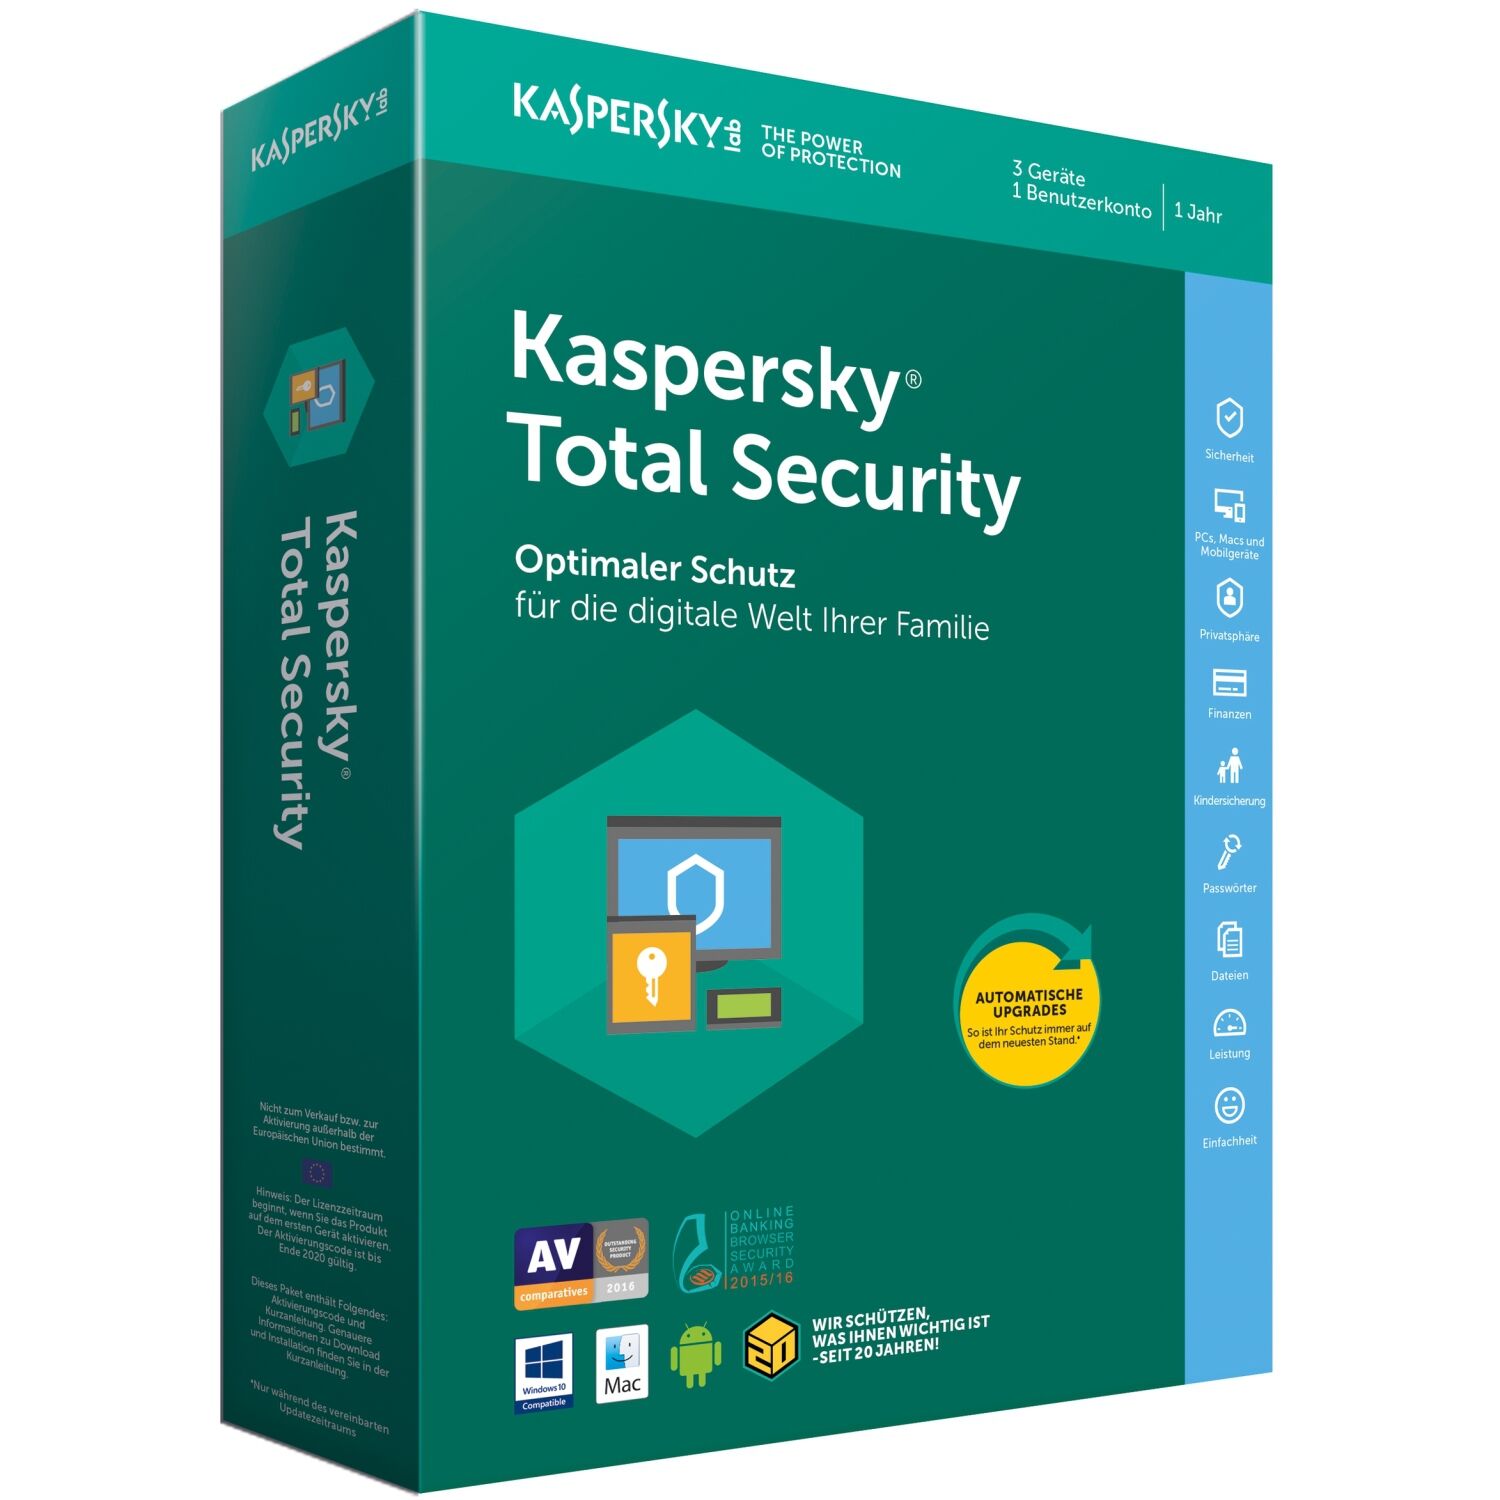 kaspersky download free